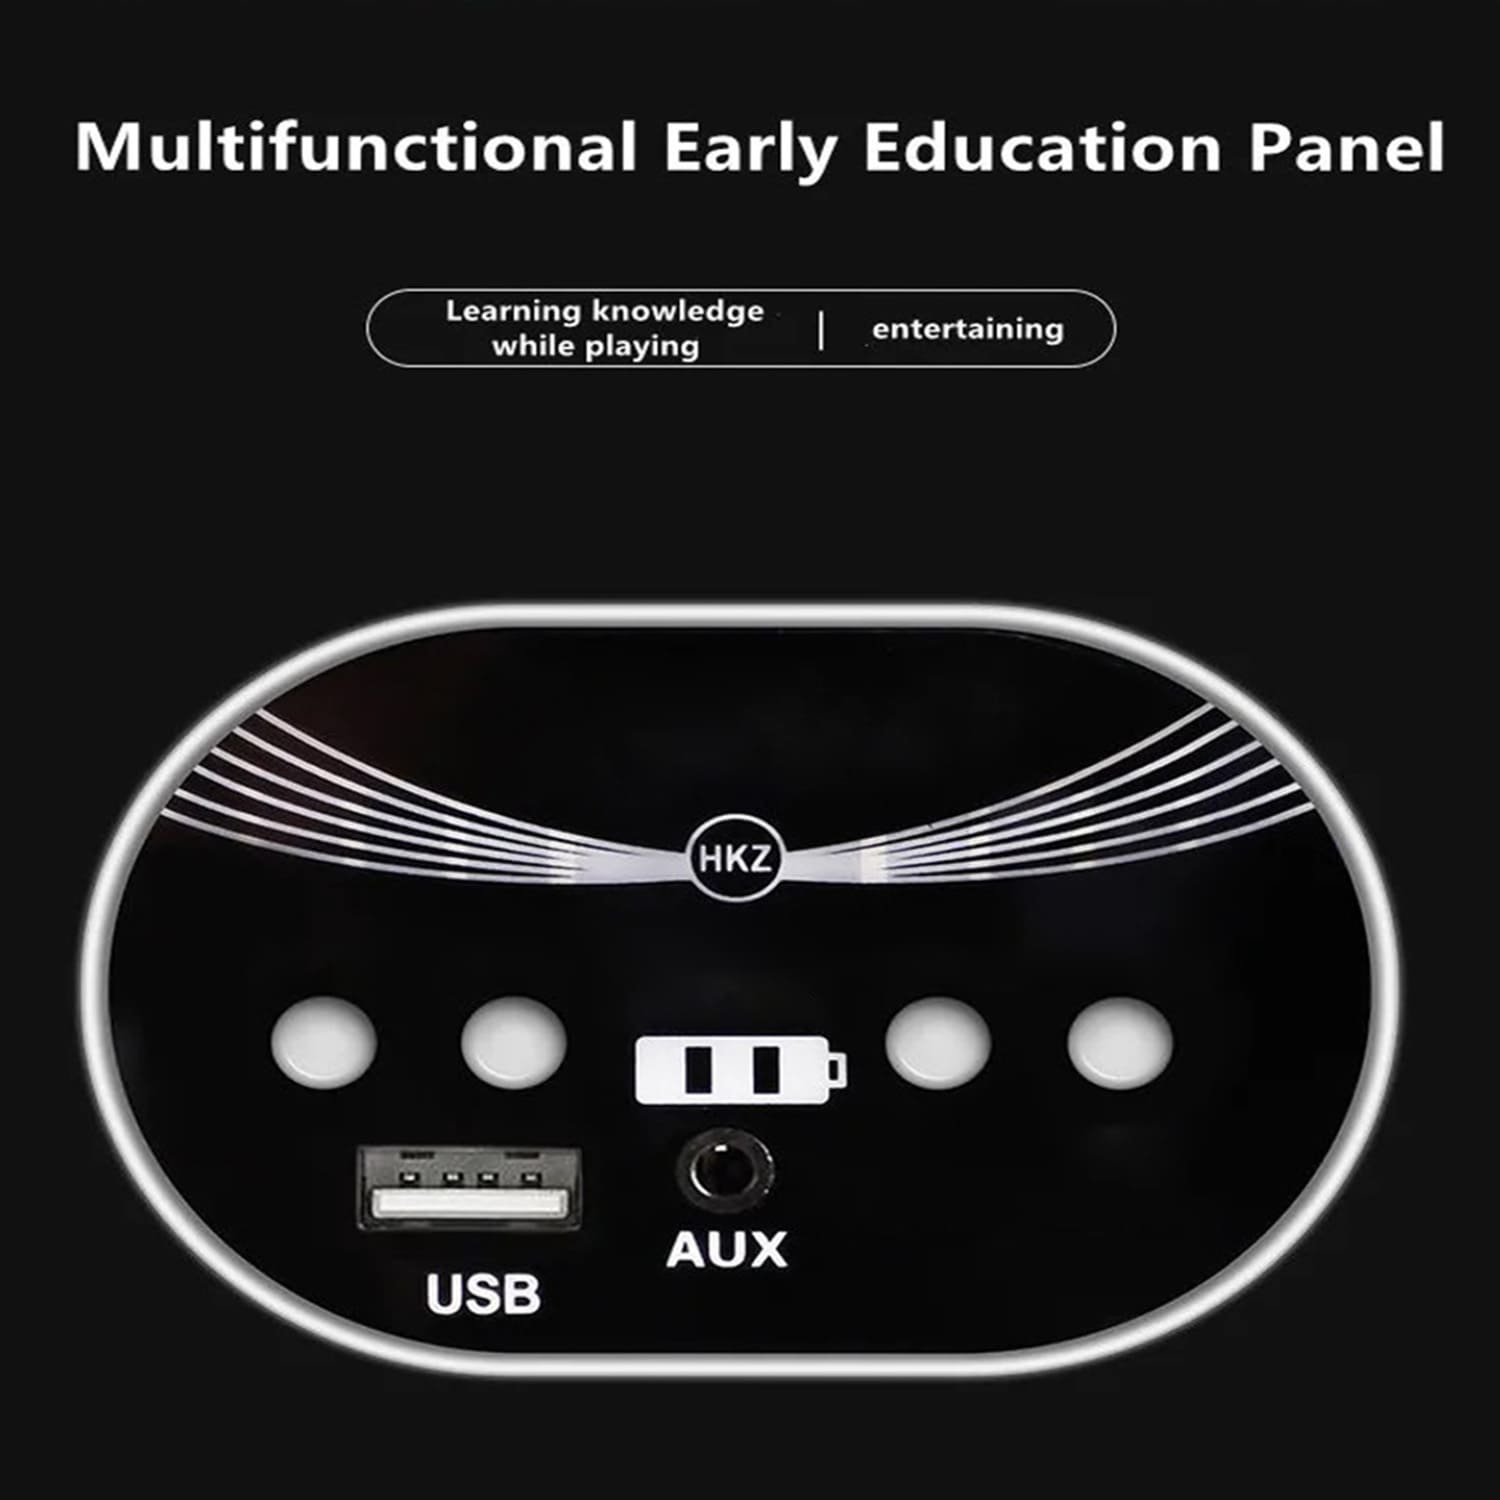 education panel